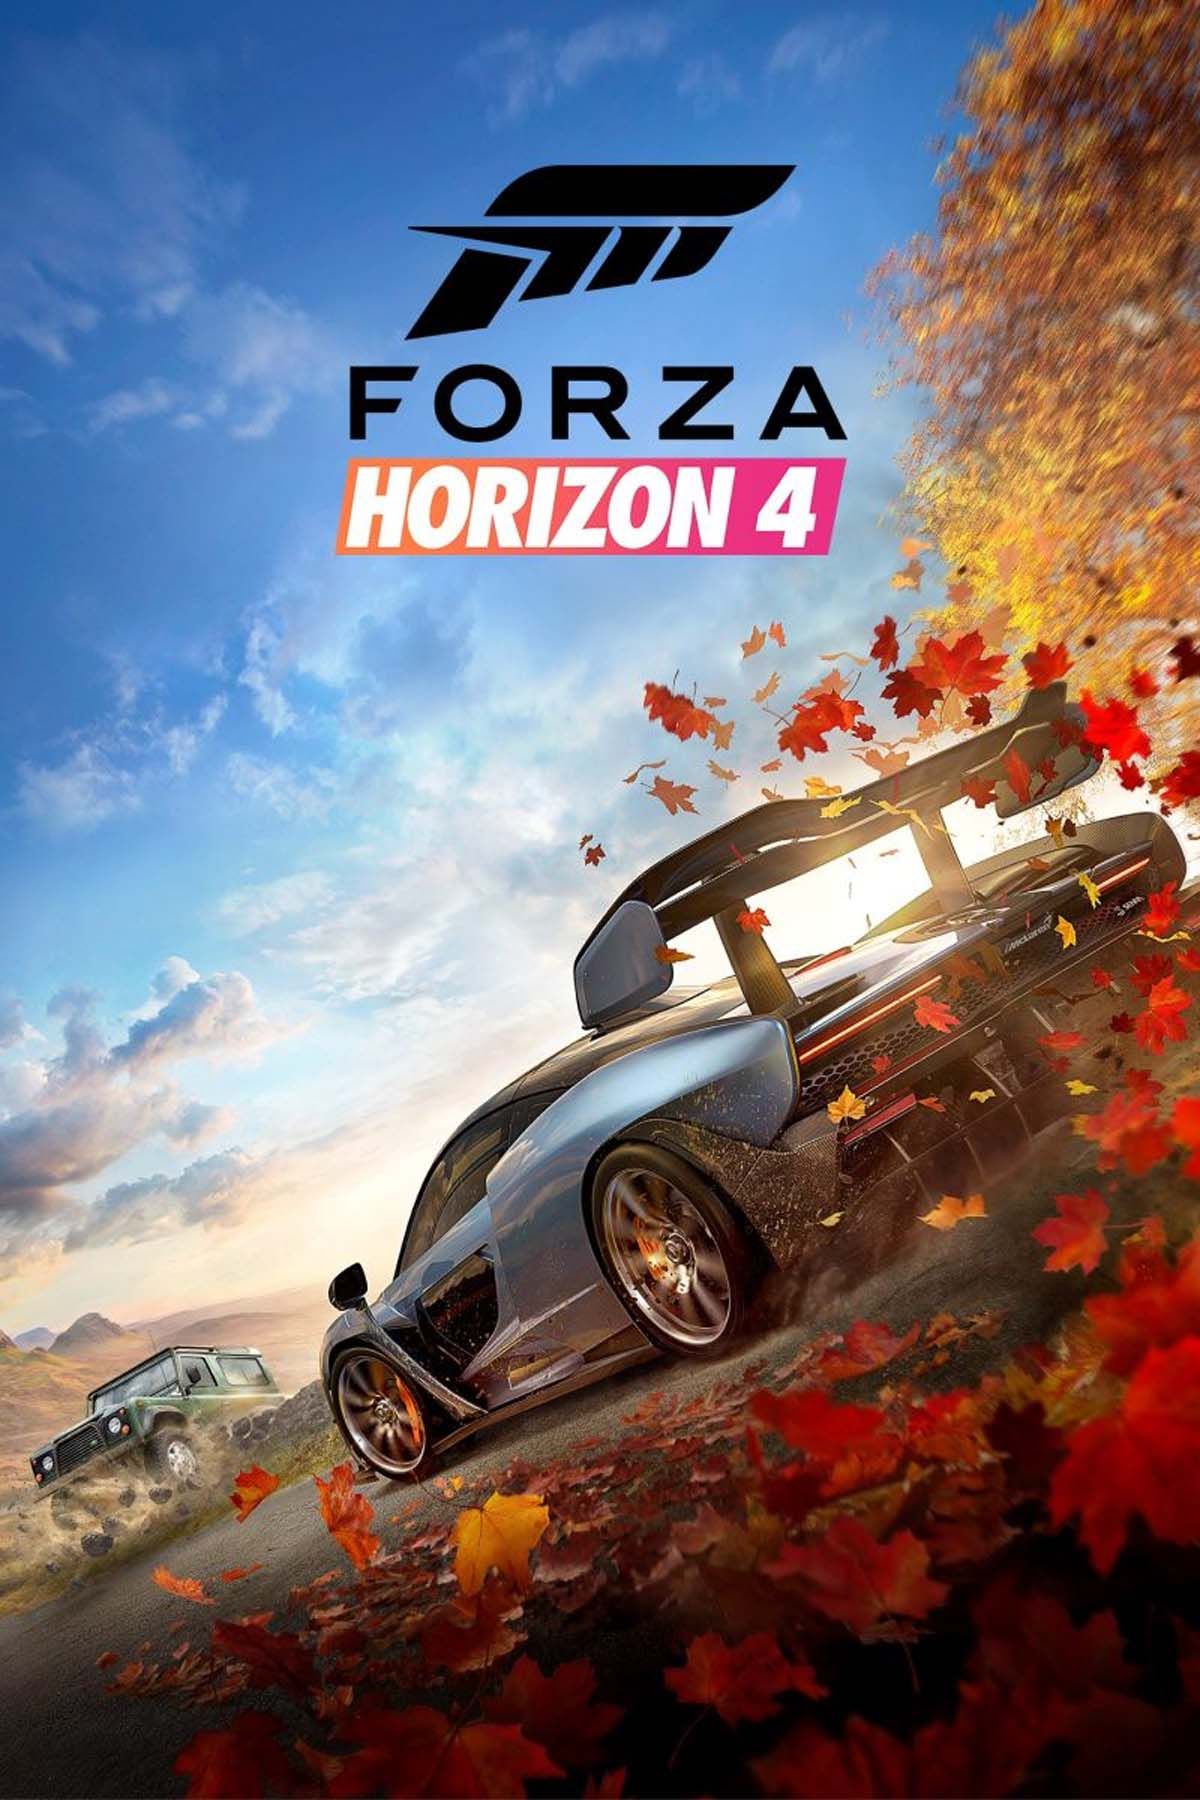 ForzaHorizonsTagPage